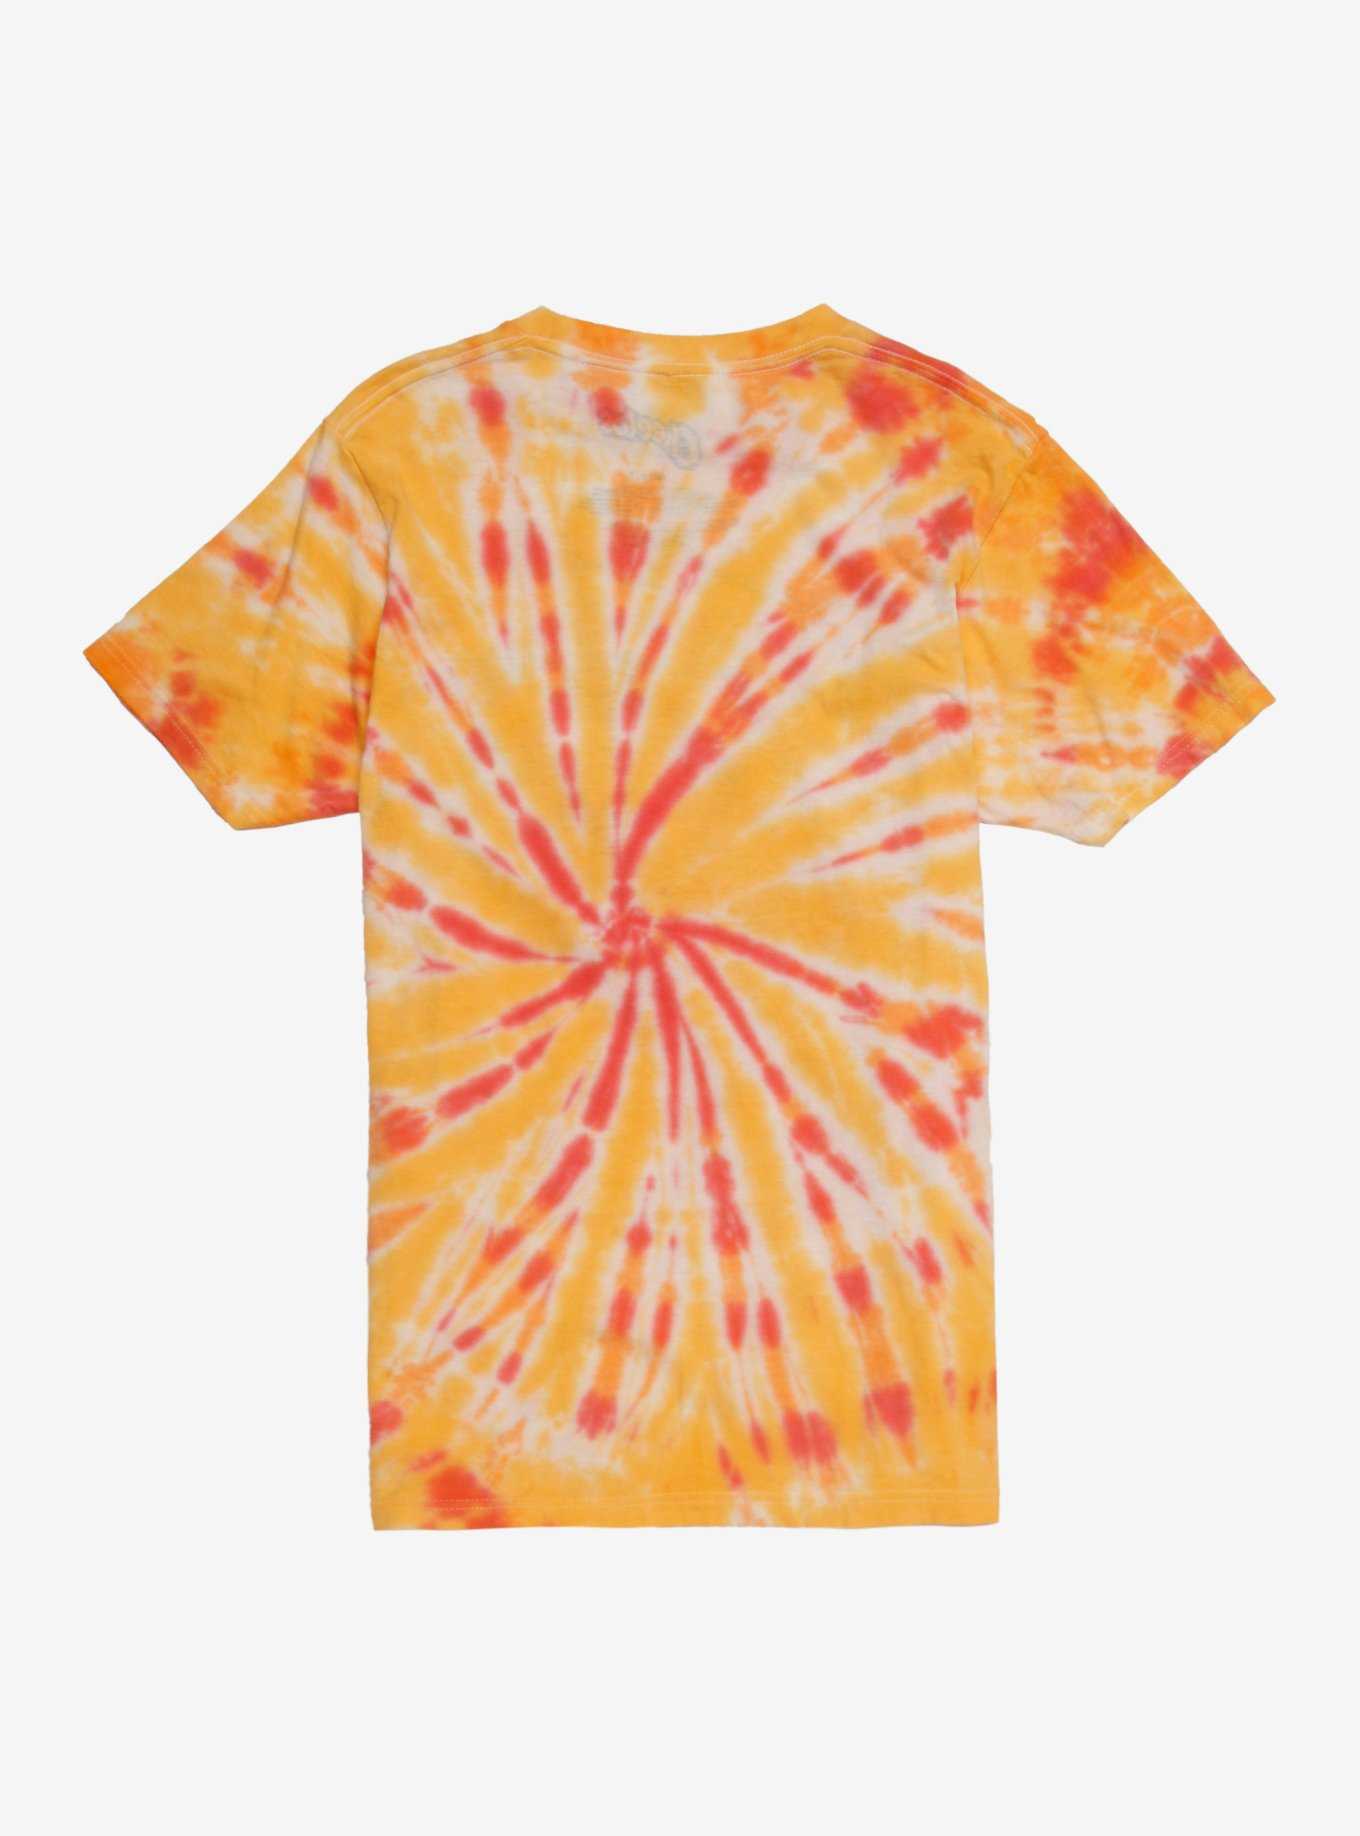 Cheetos Flamin' Hot Tie-Dye Girls T-Shirt, , hi-res